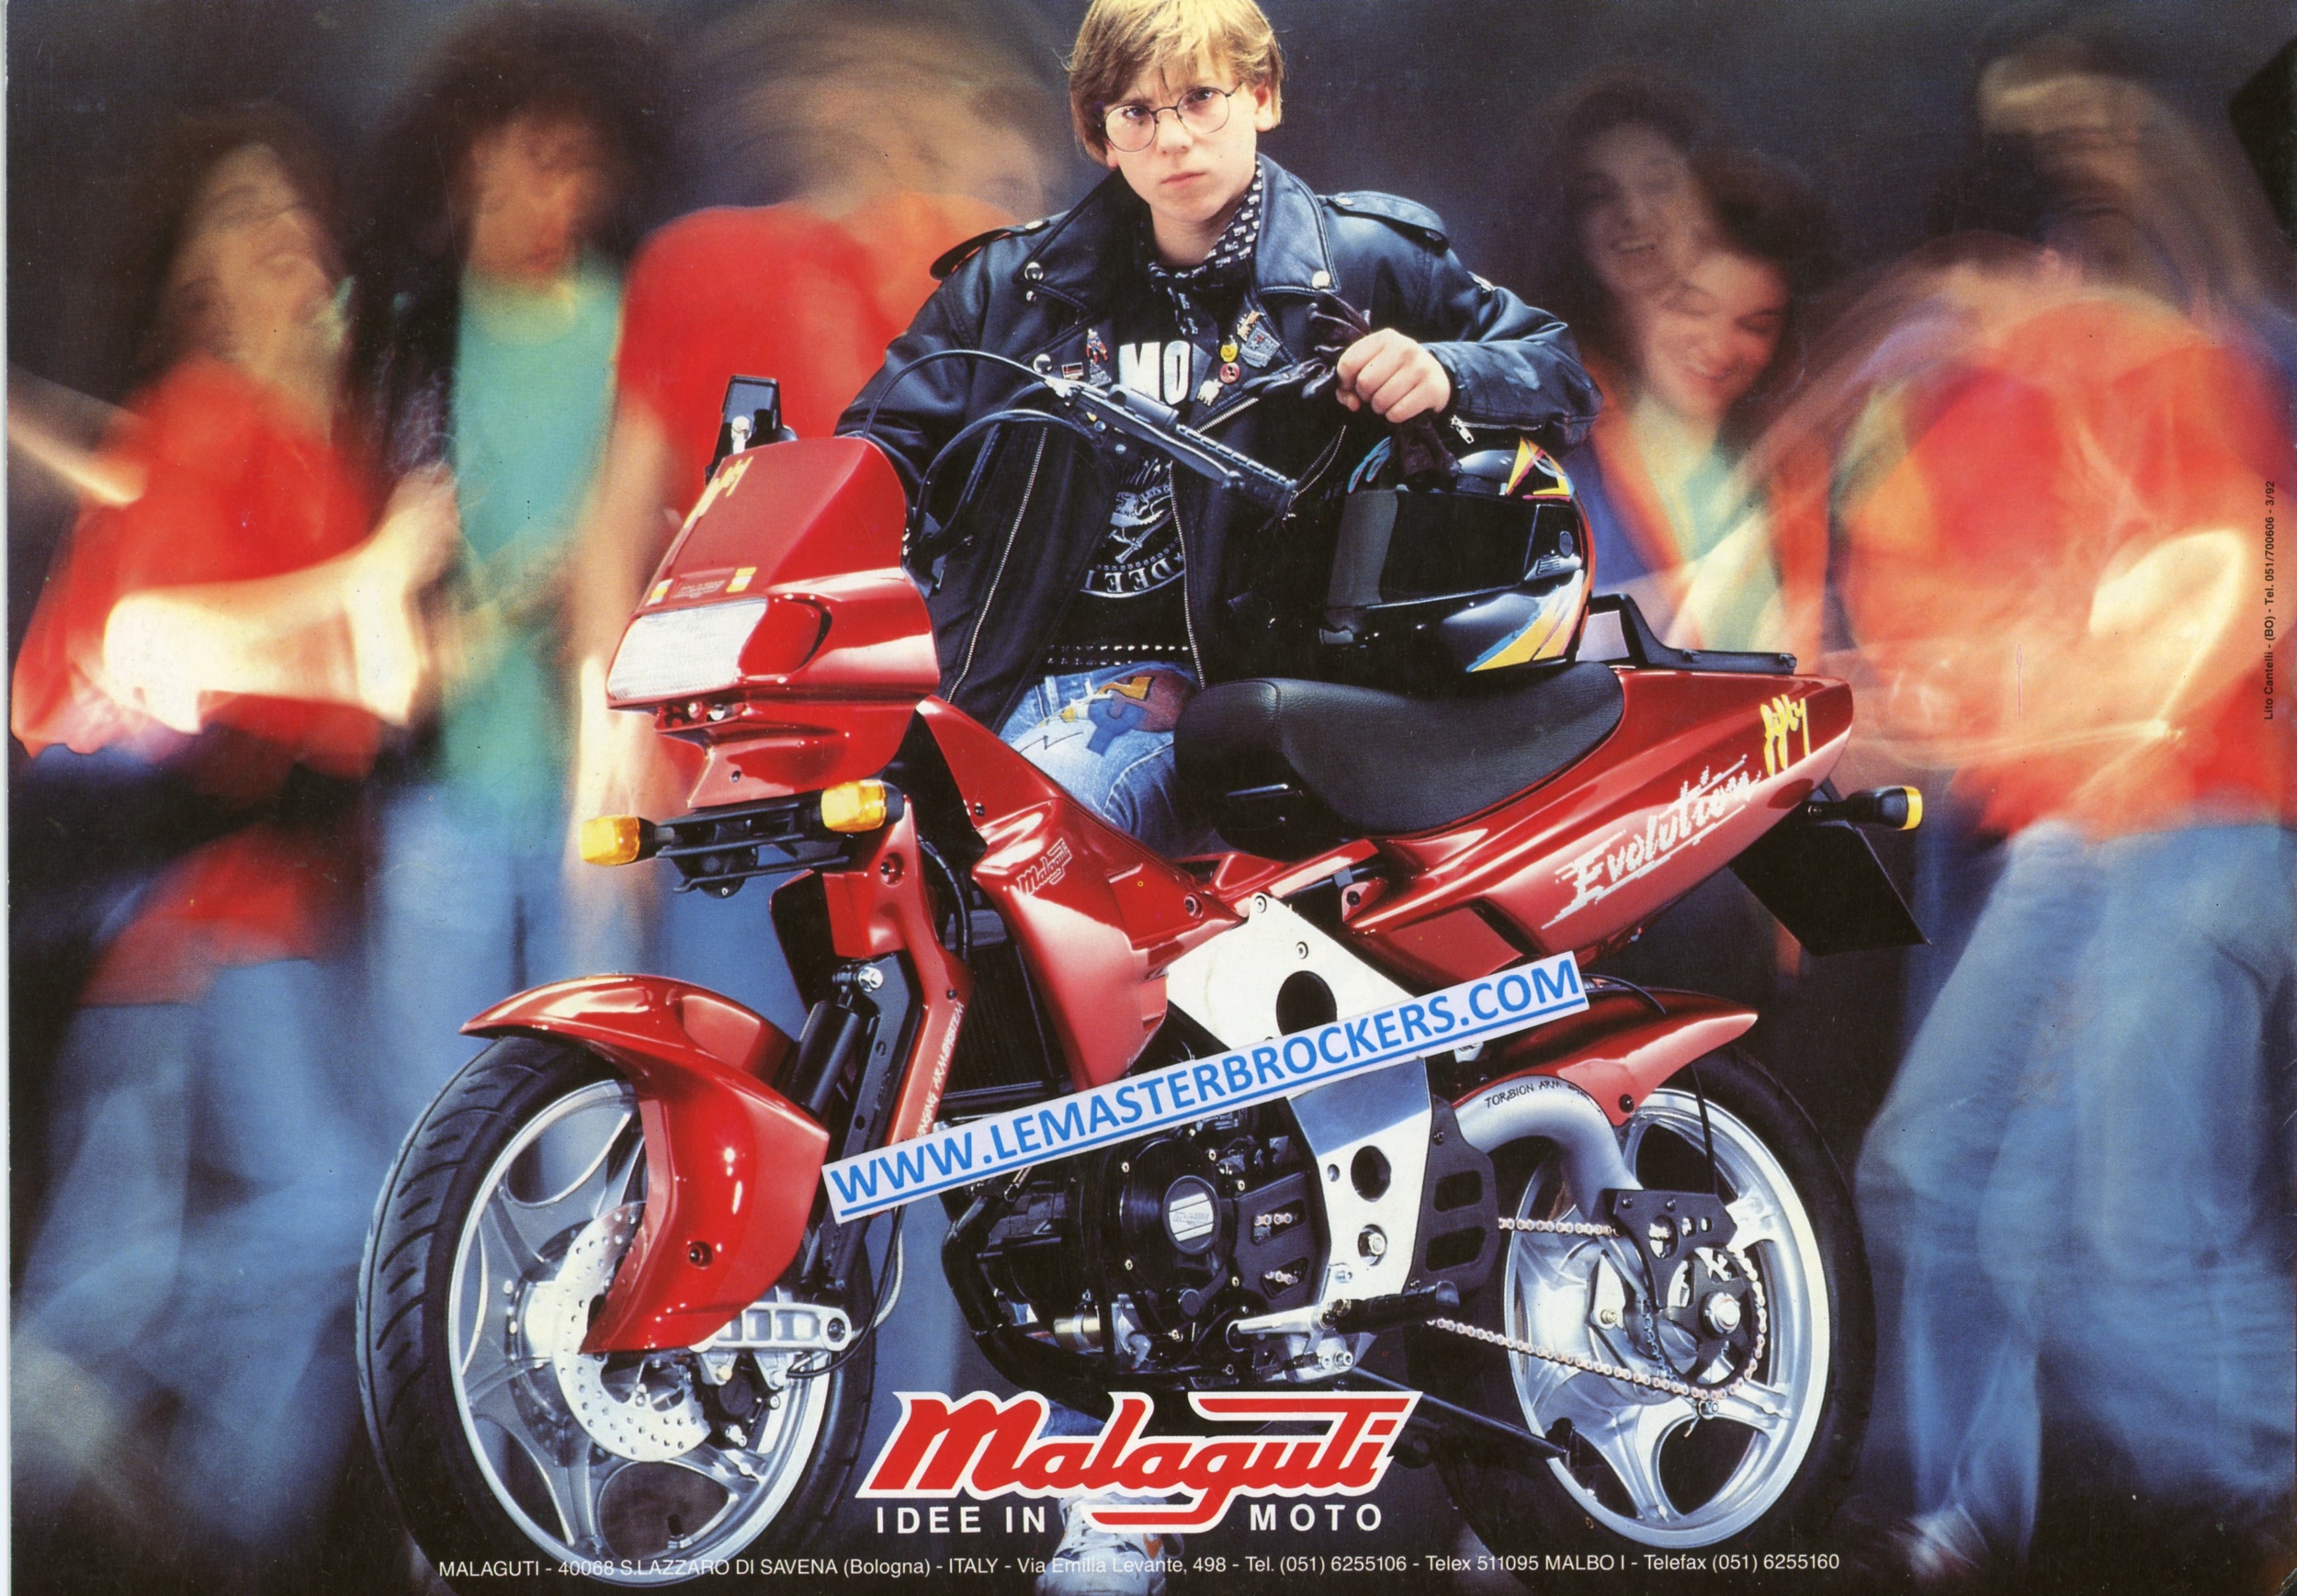 brochure-malugati-50-fifty-lemasterbrockers-catalogue-prospectus-mobylette-motorcycles